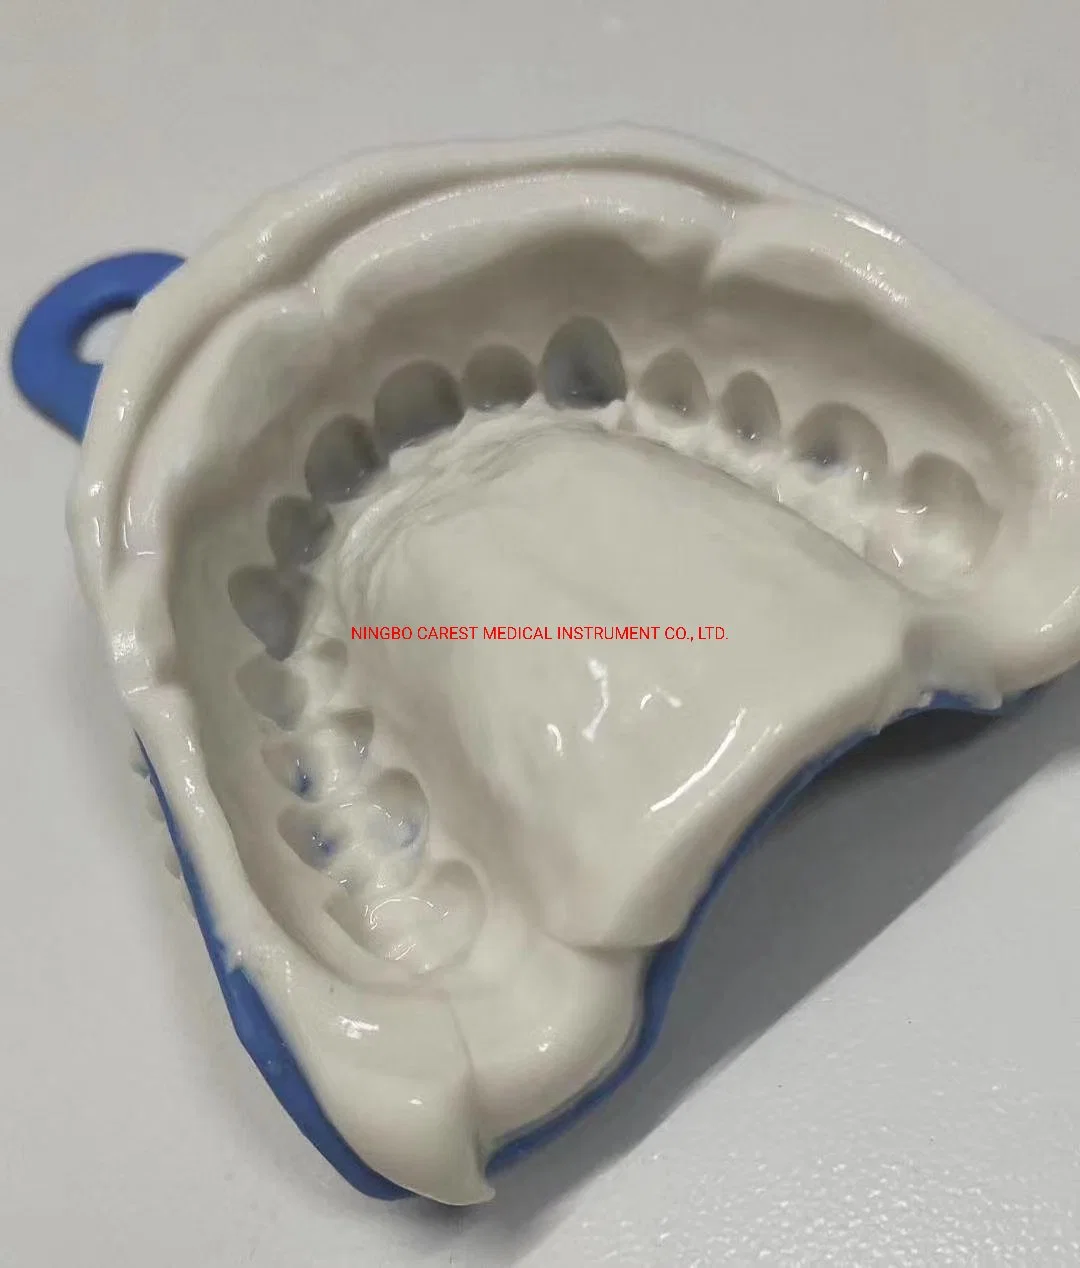 China Manufacture Supply Top Quality Dental Alginate Impression Material